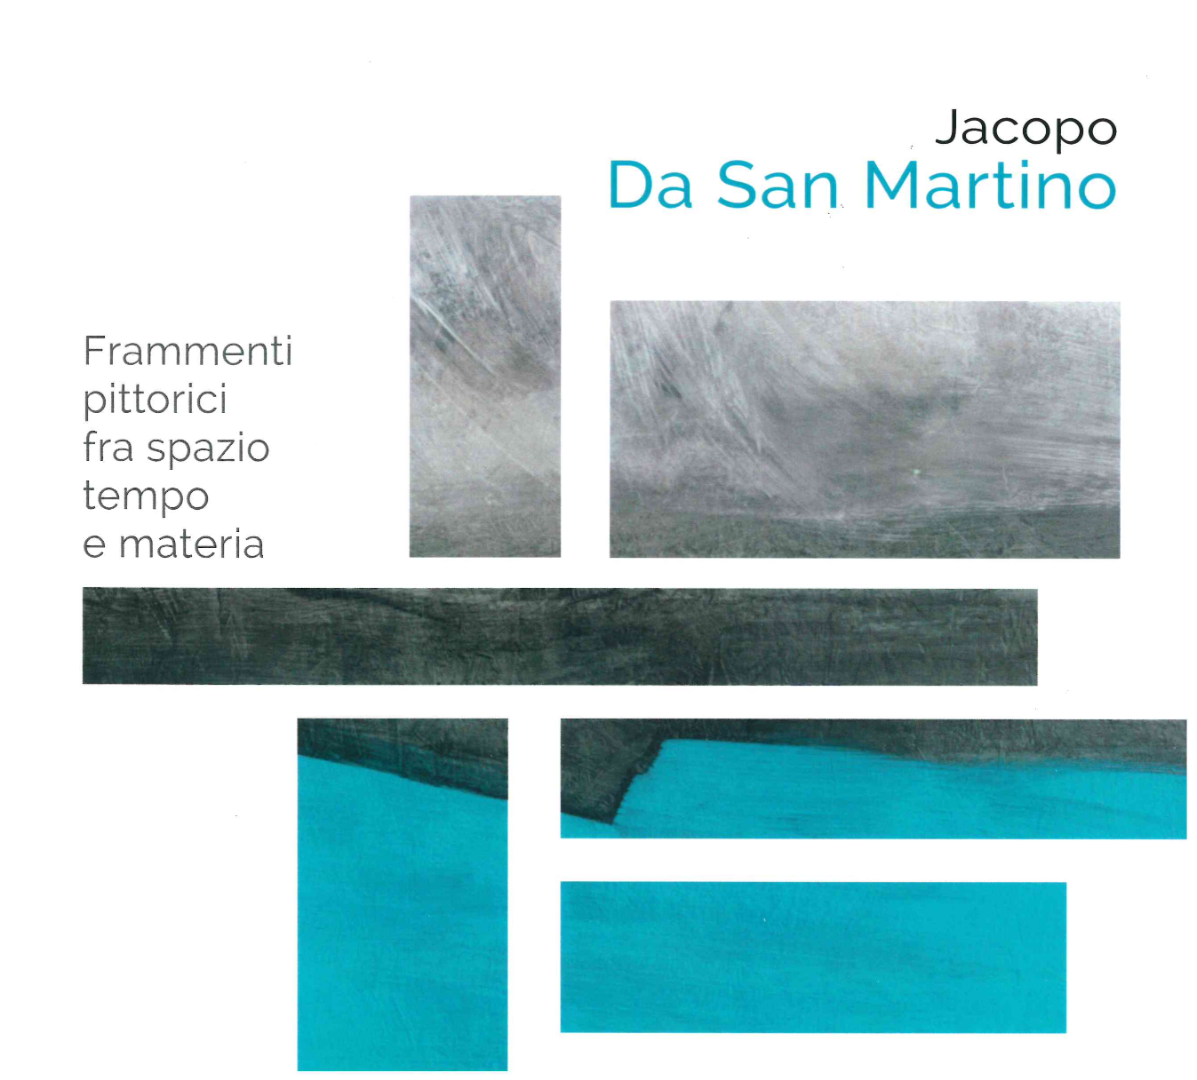 JACOPO DA SAN MARTINO